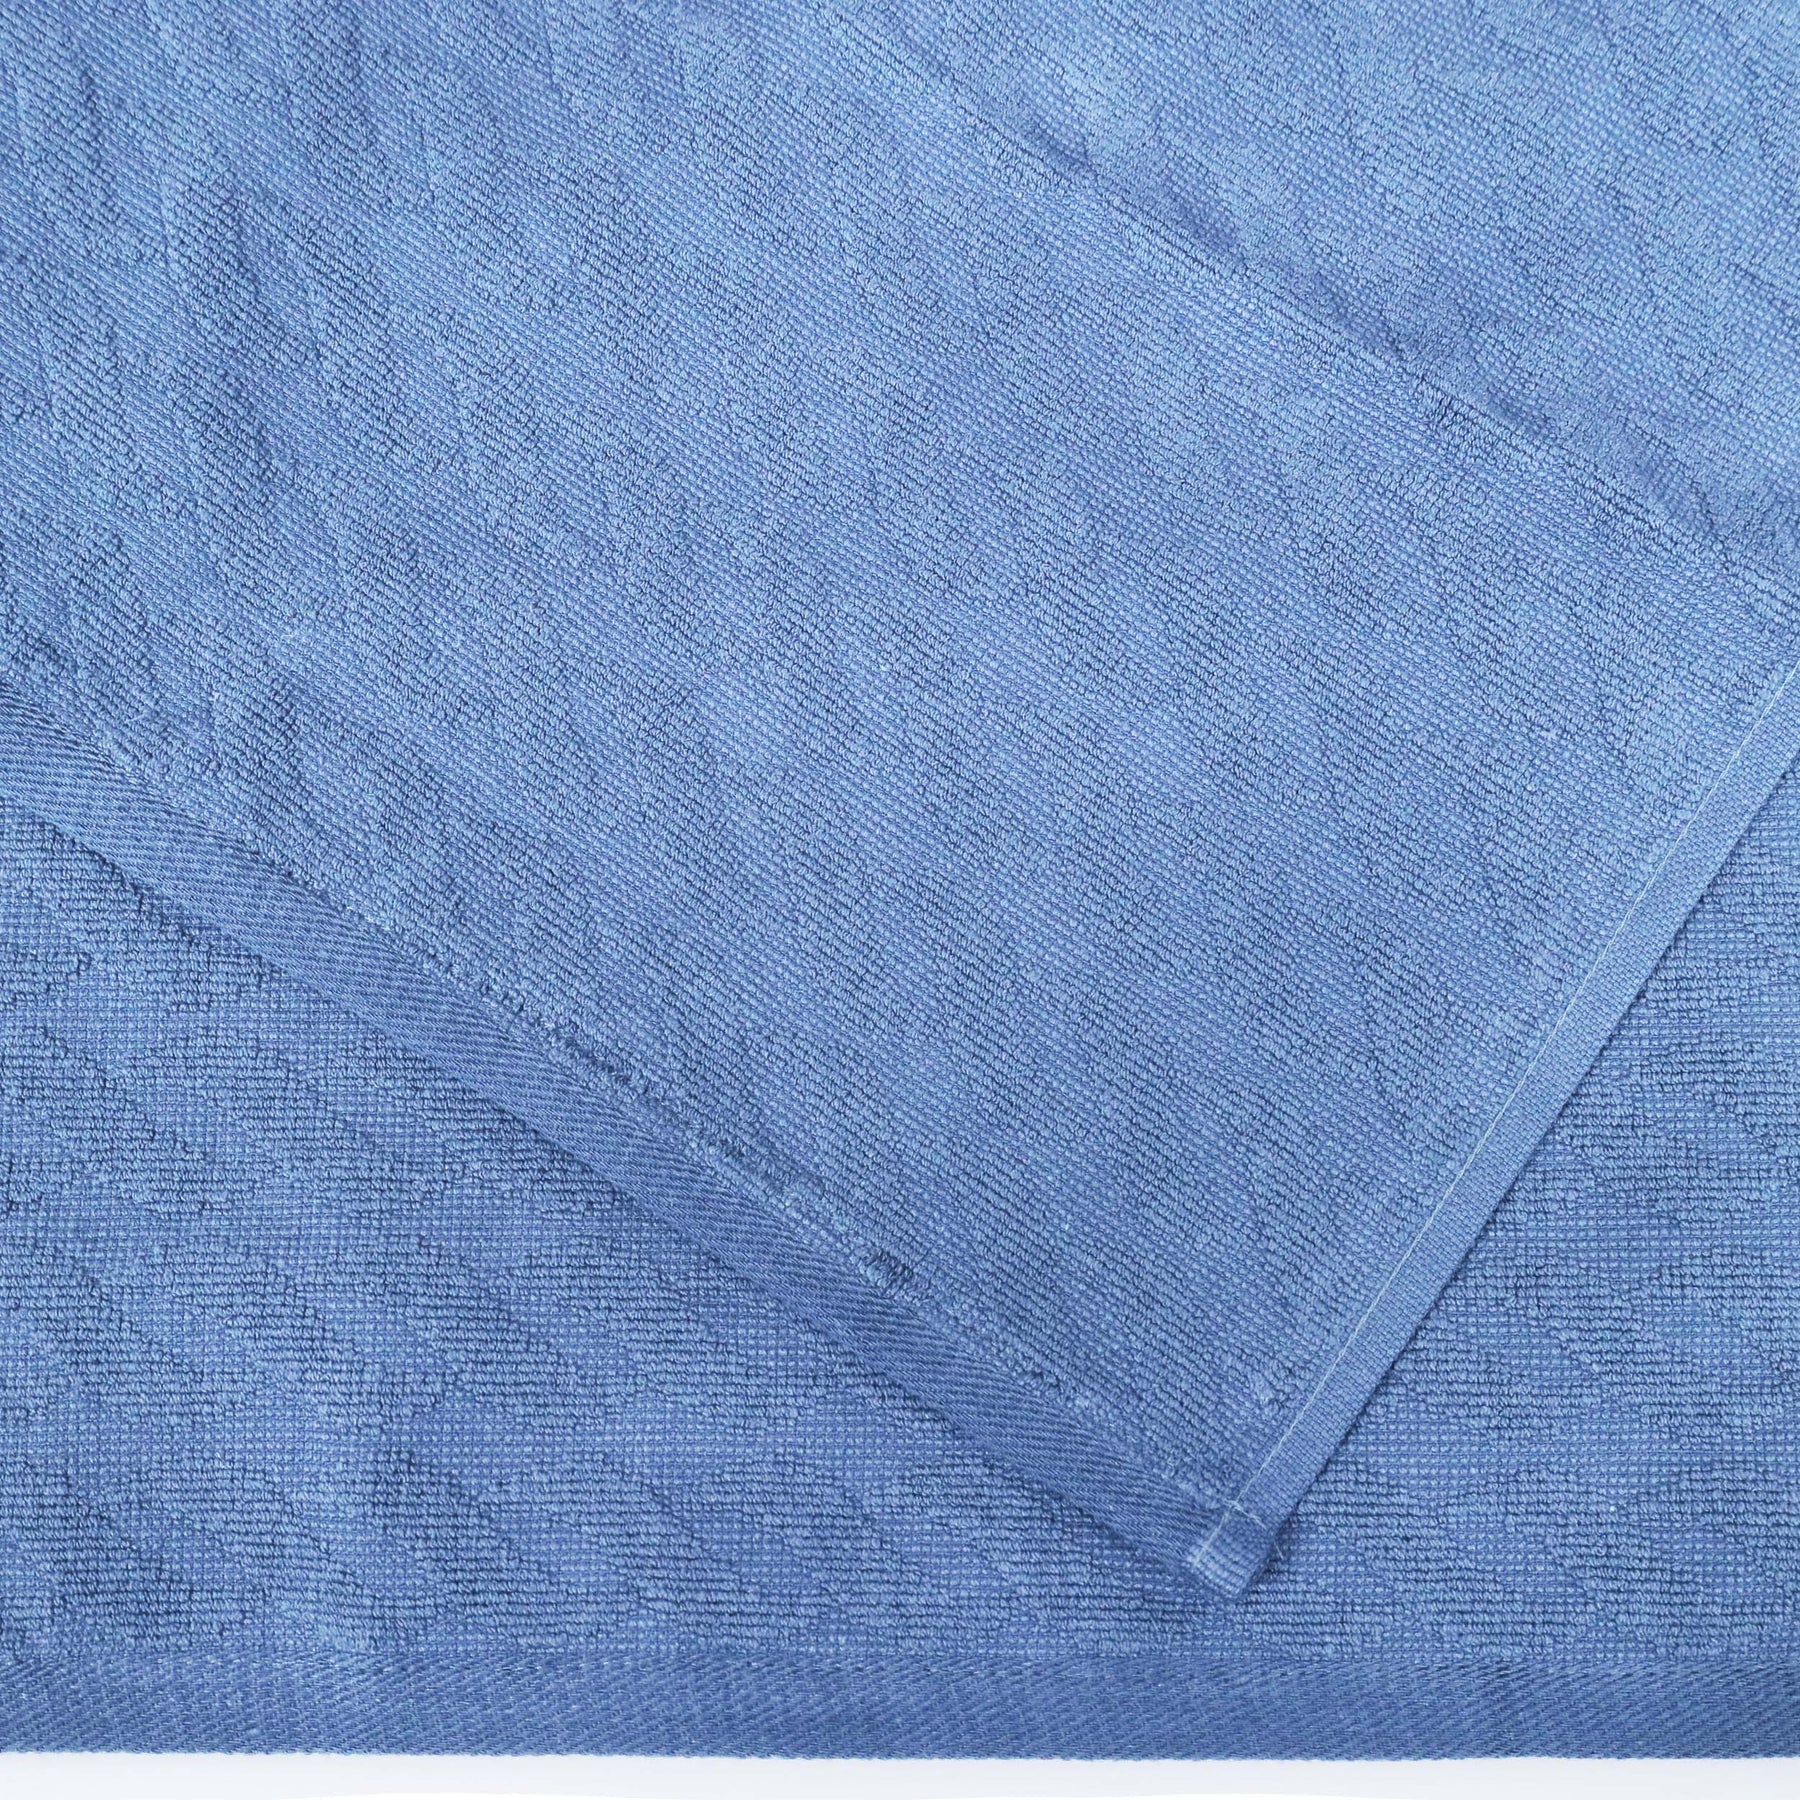 Premium Turkish Cotton Jacquard Herringbone and Solid 12-Piece Face Towel/ Washcloth Set - Pacific Blue